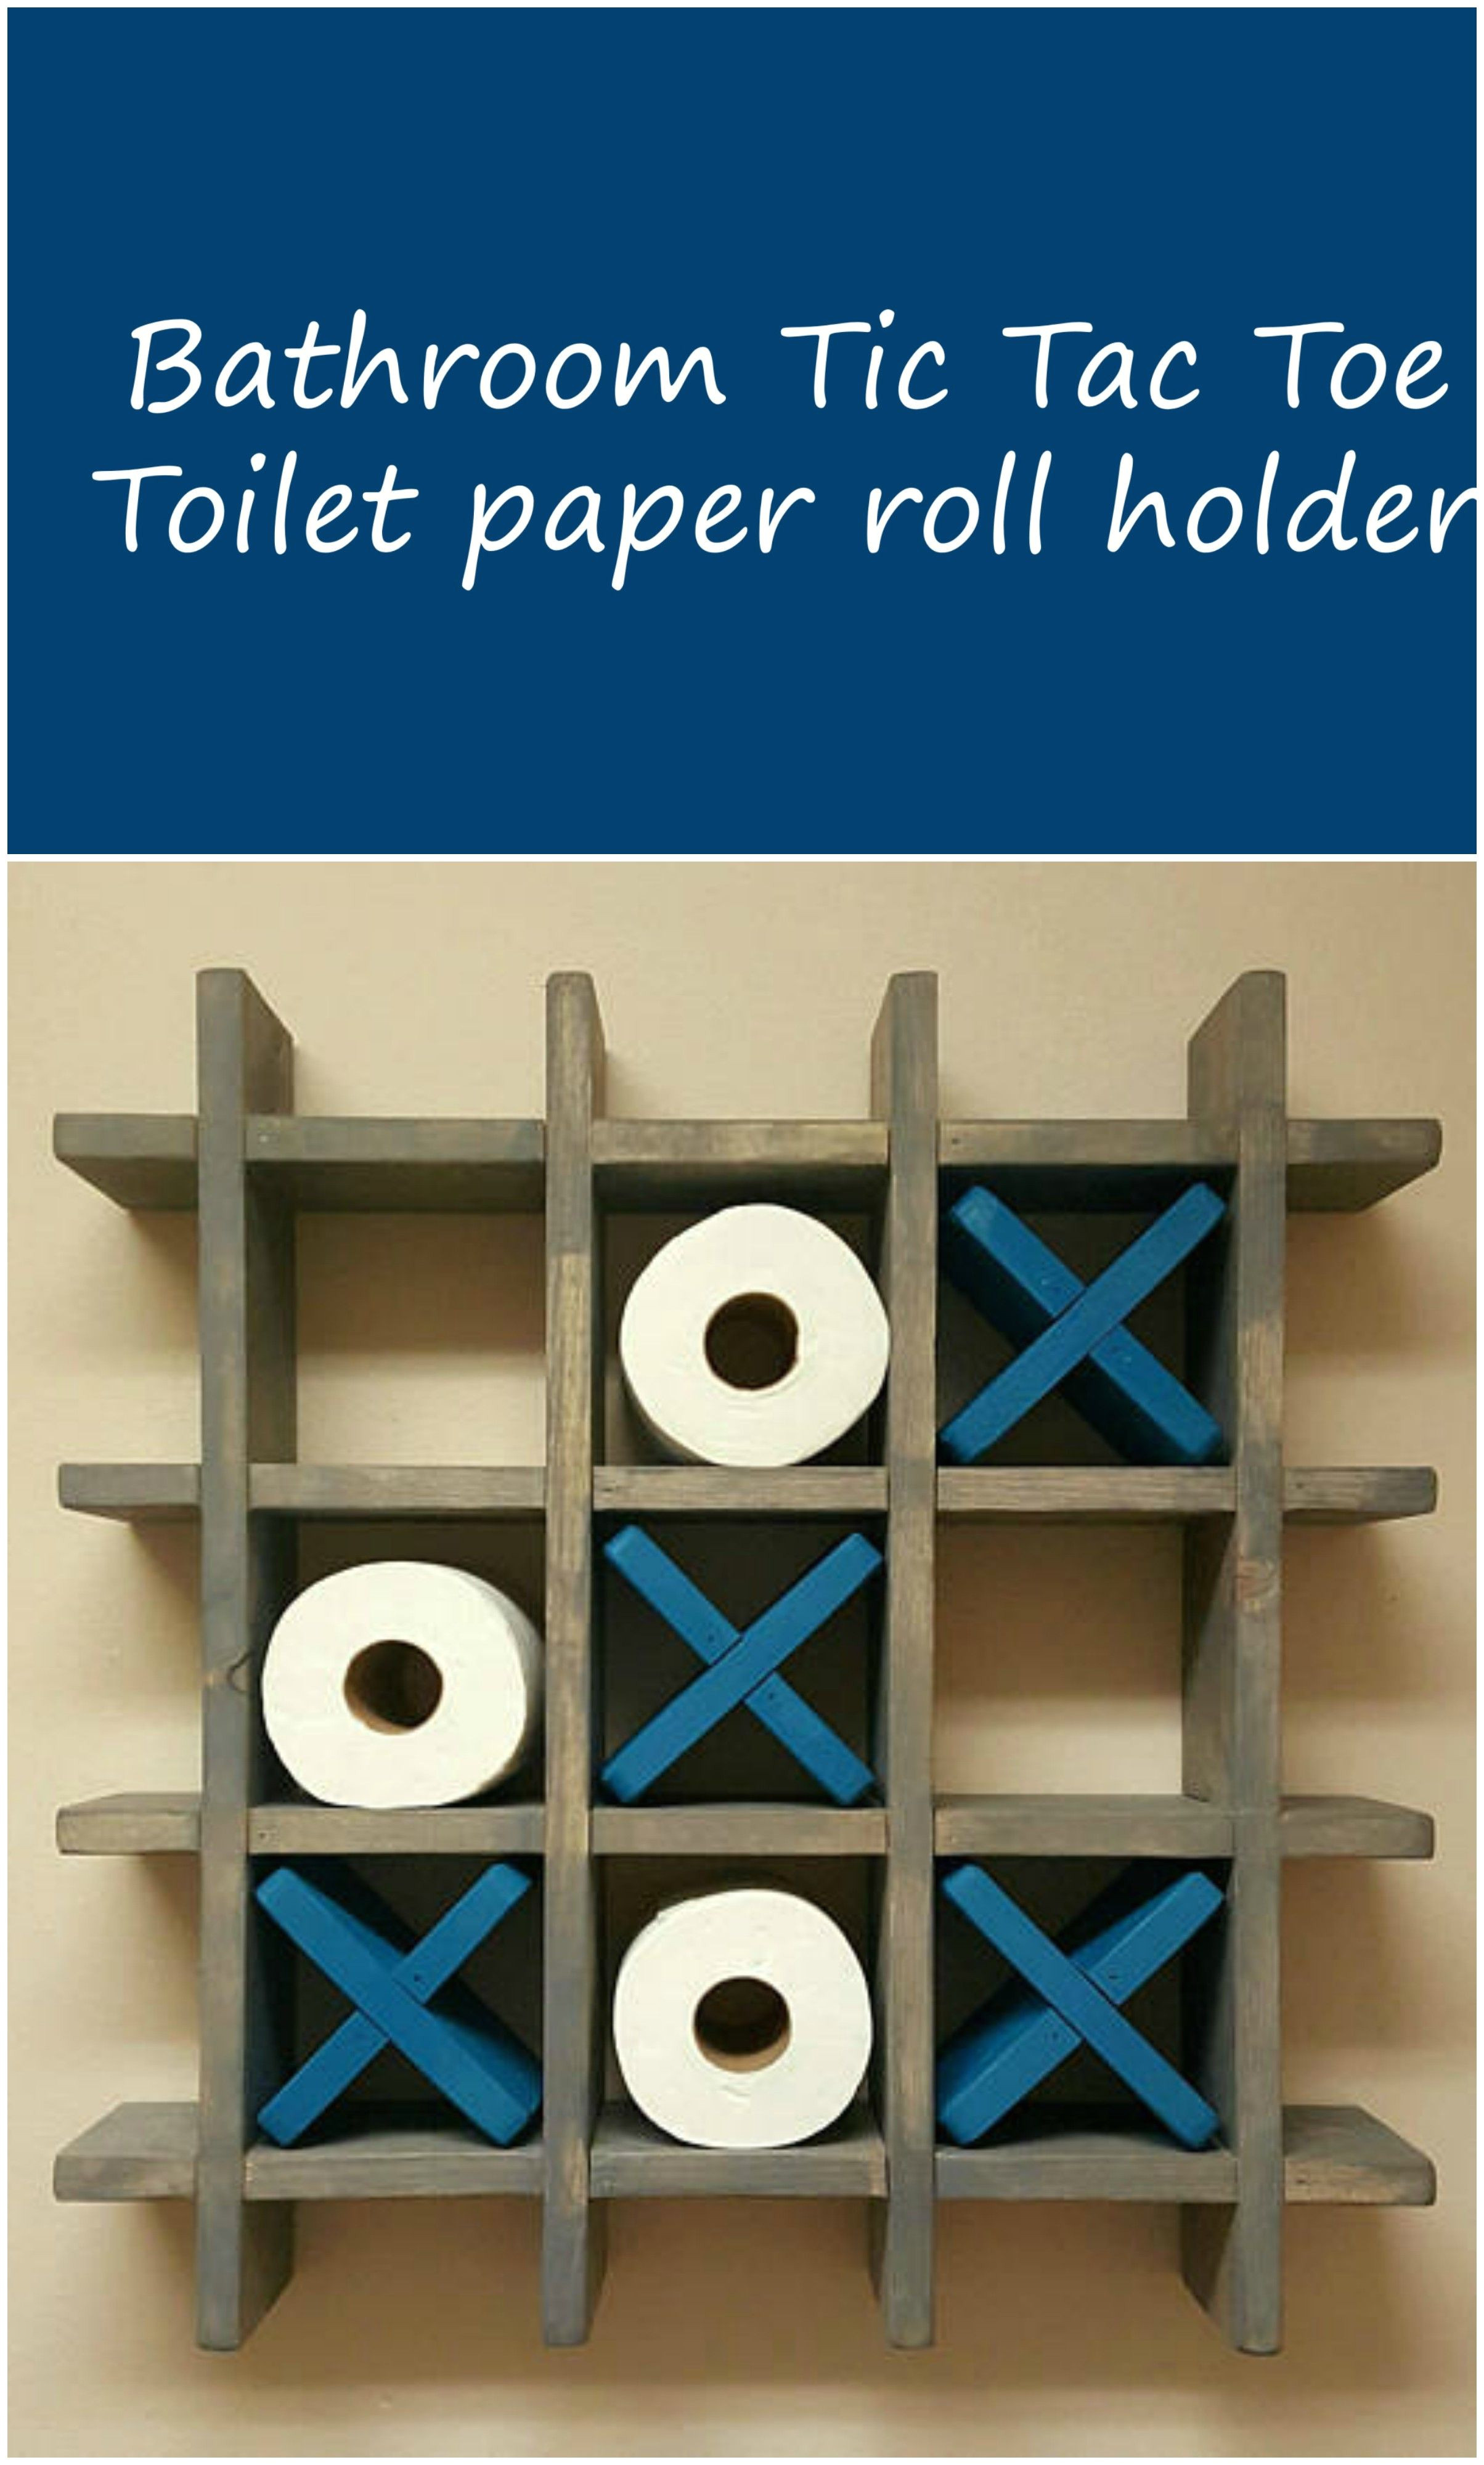 Tic Tac toe toilet Paper Holder Plans Bathroom Tic Tac toe Game Made to order toilet Paper Roll